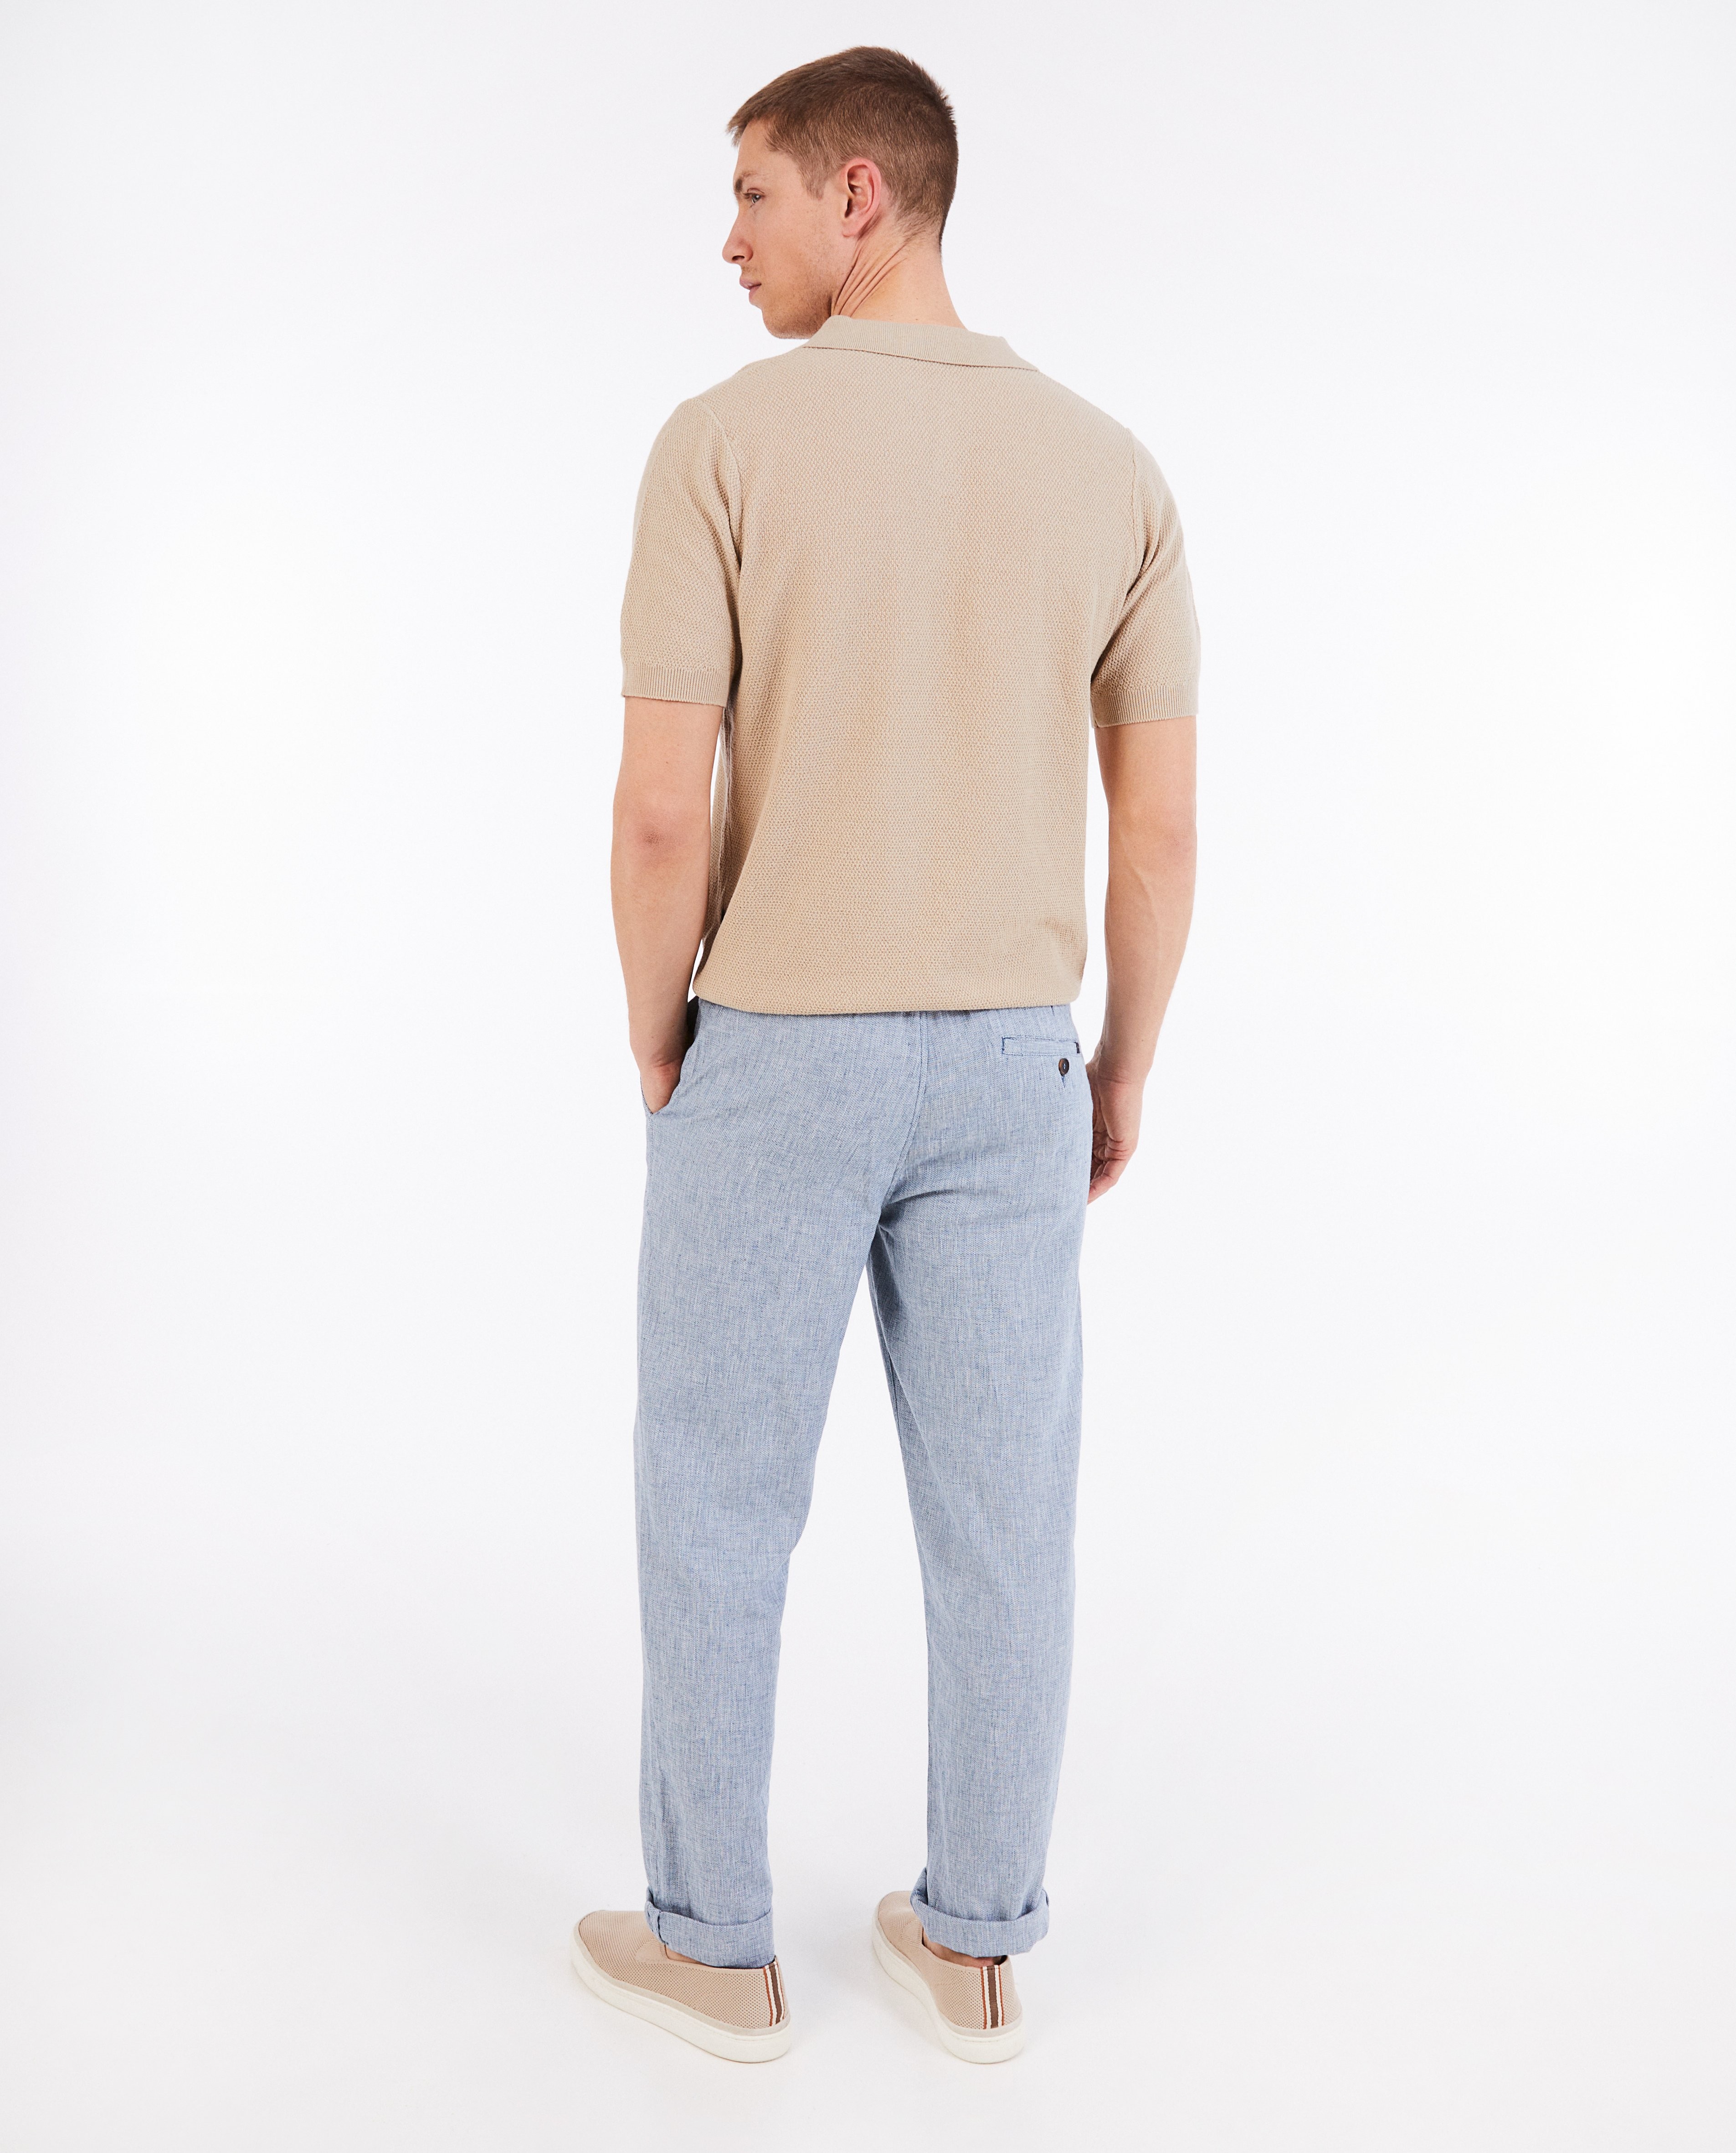 Pantalons - Pantalon habillé